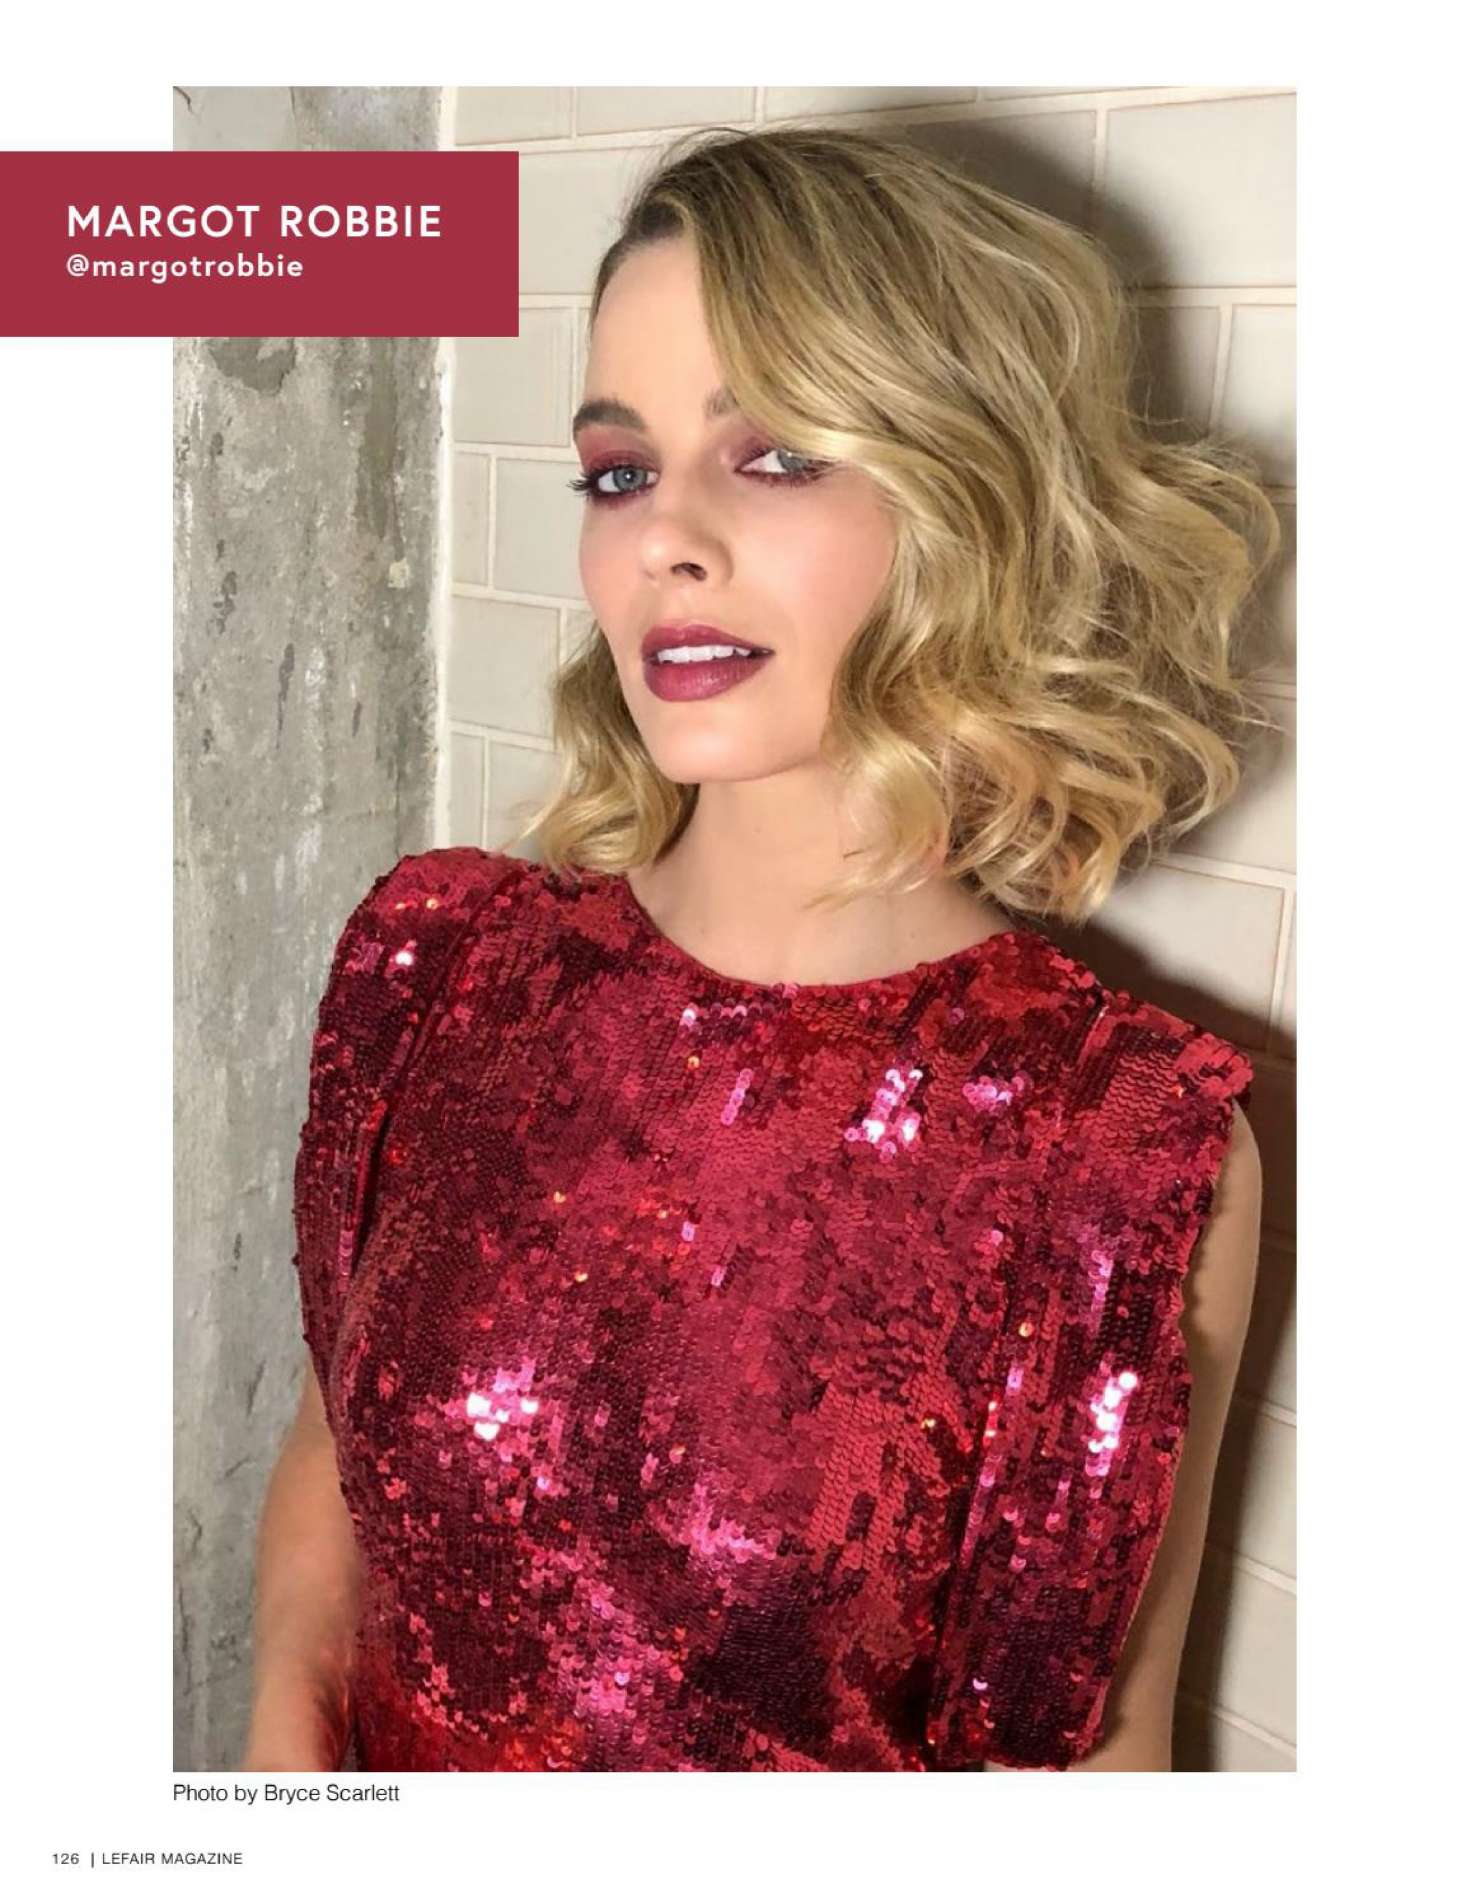 Margot Robbie for Lefair Magazine 2018